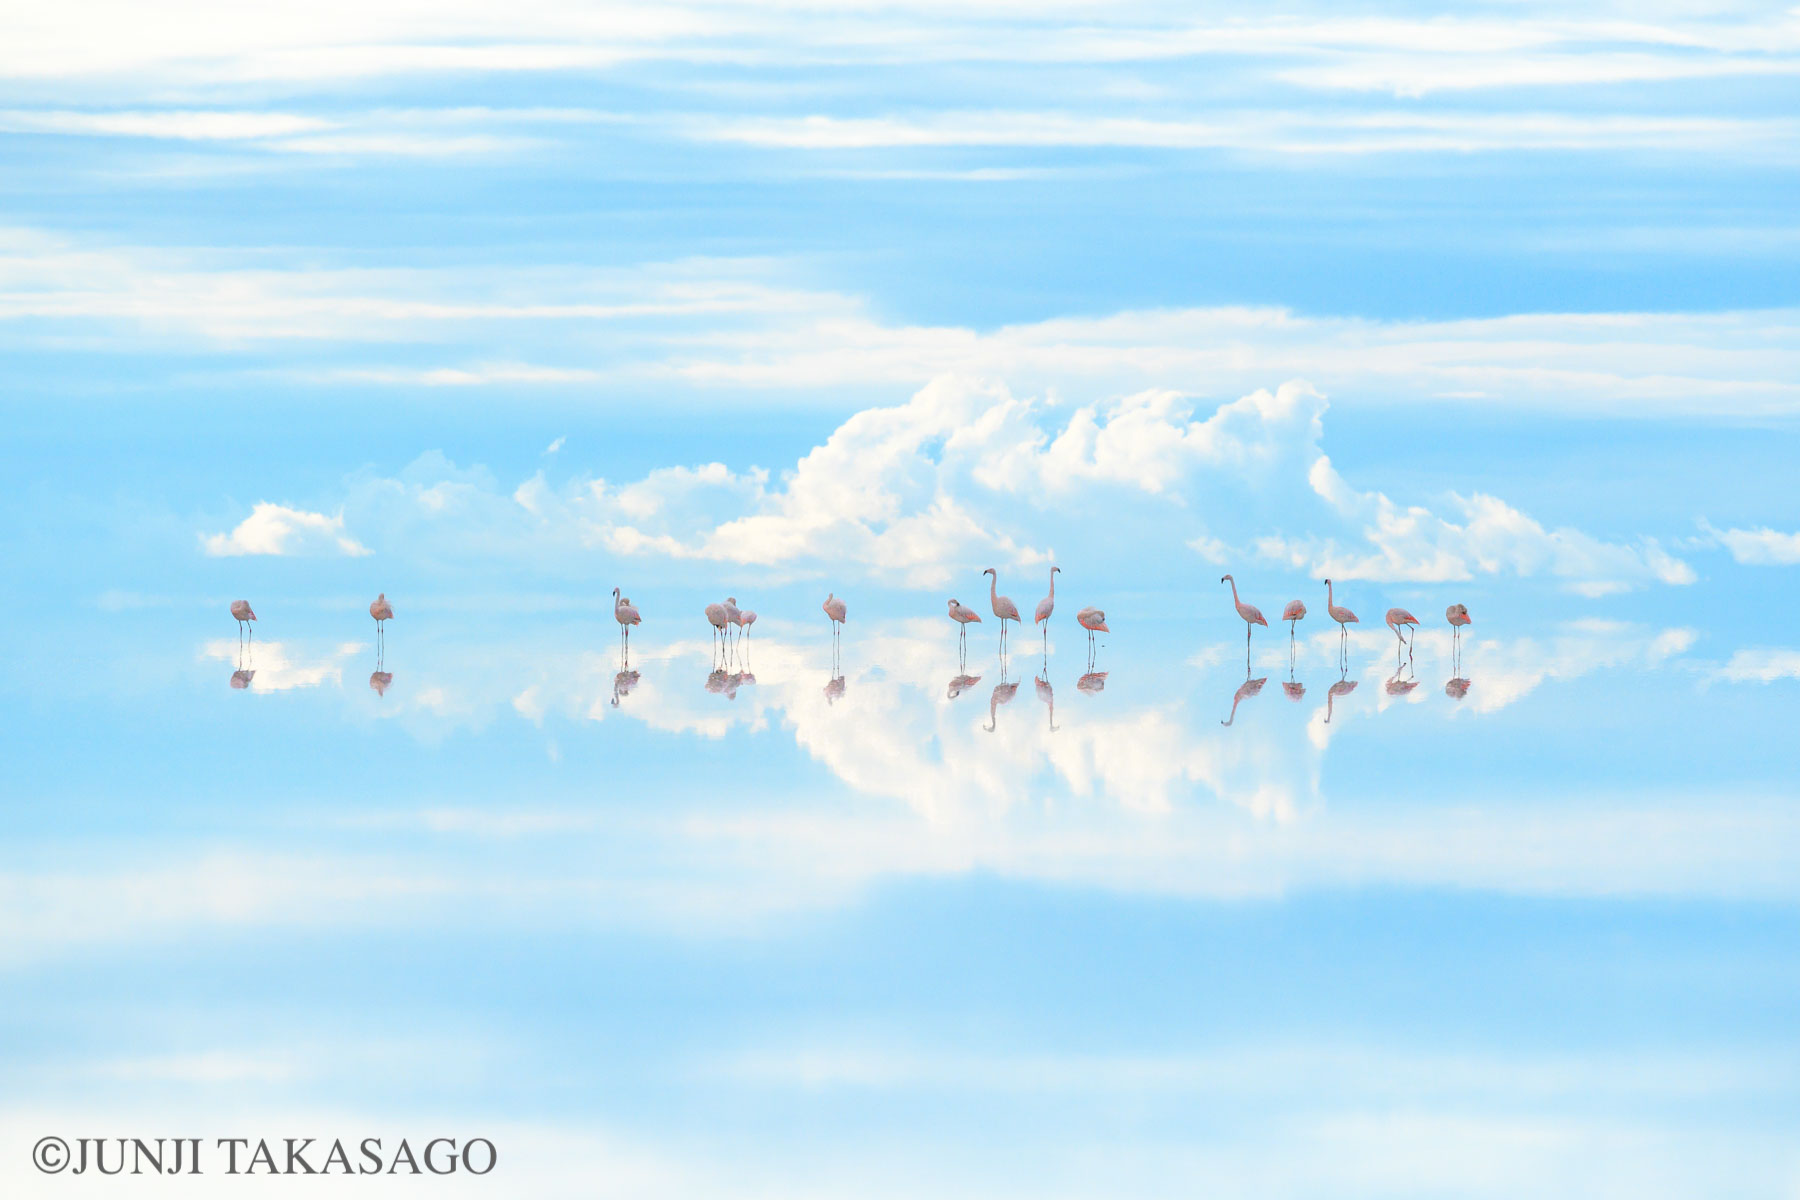 「Heavenly Flamingos」高砂淳二
Wildlife Photographer of the Year 58「自然芸術部門」最優秀賞受賞作品